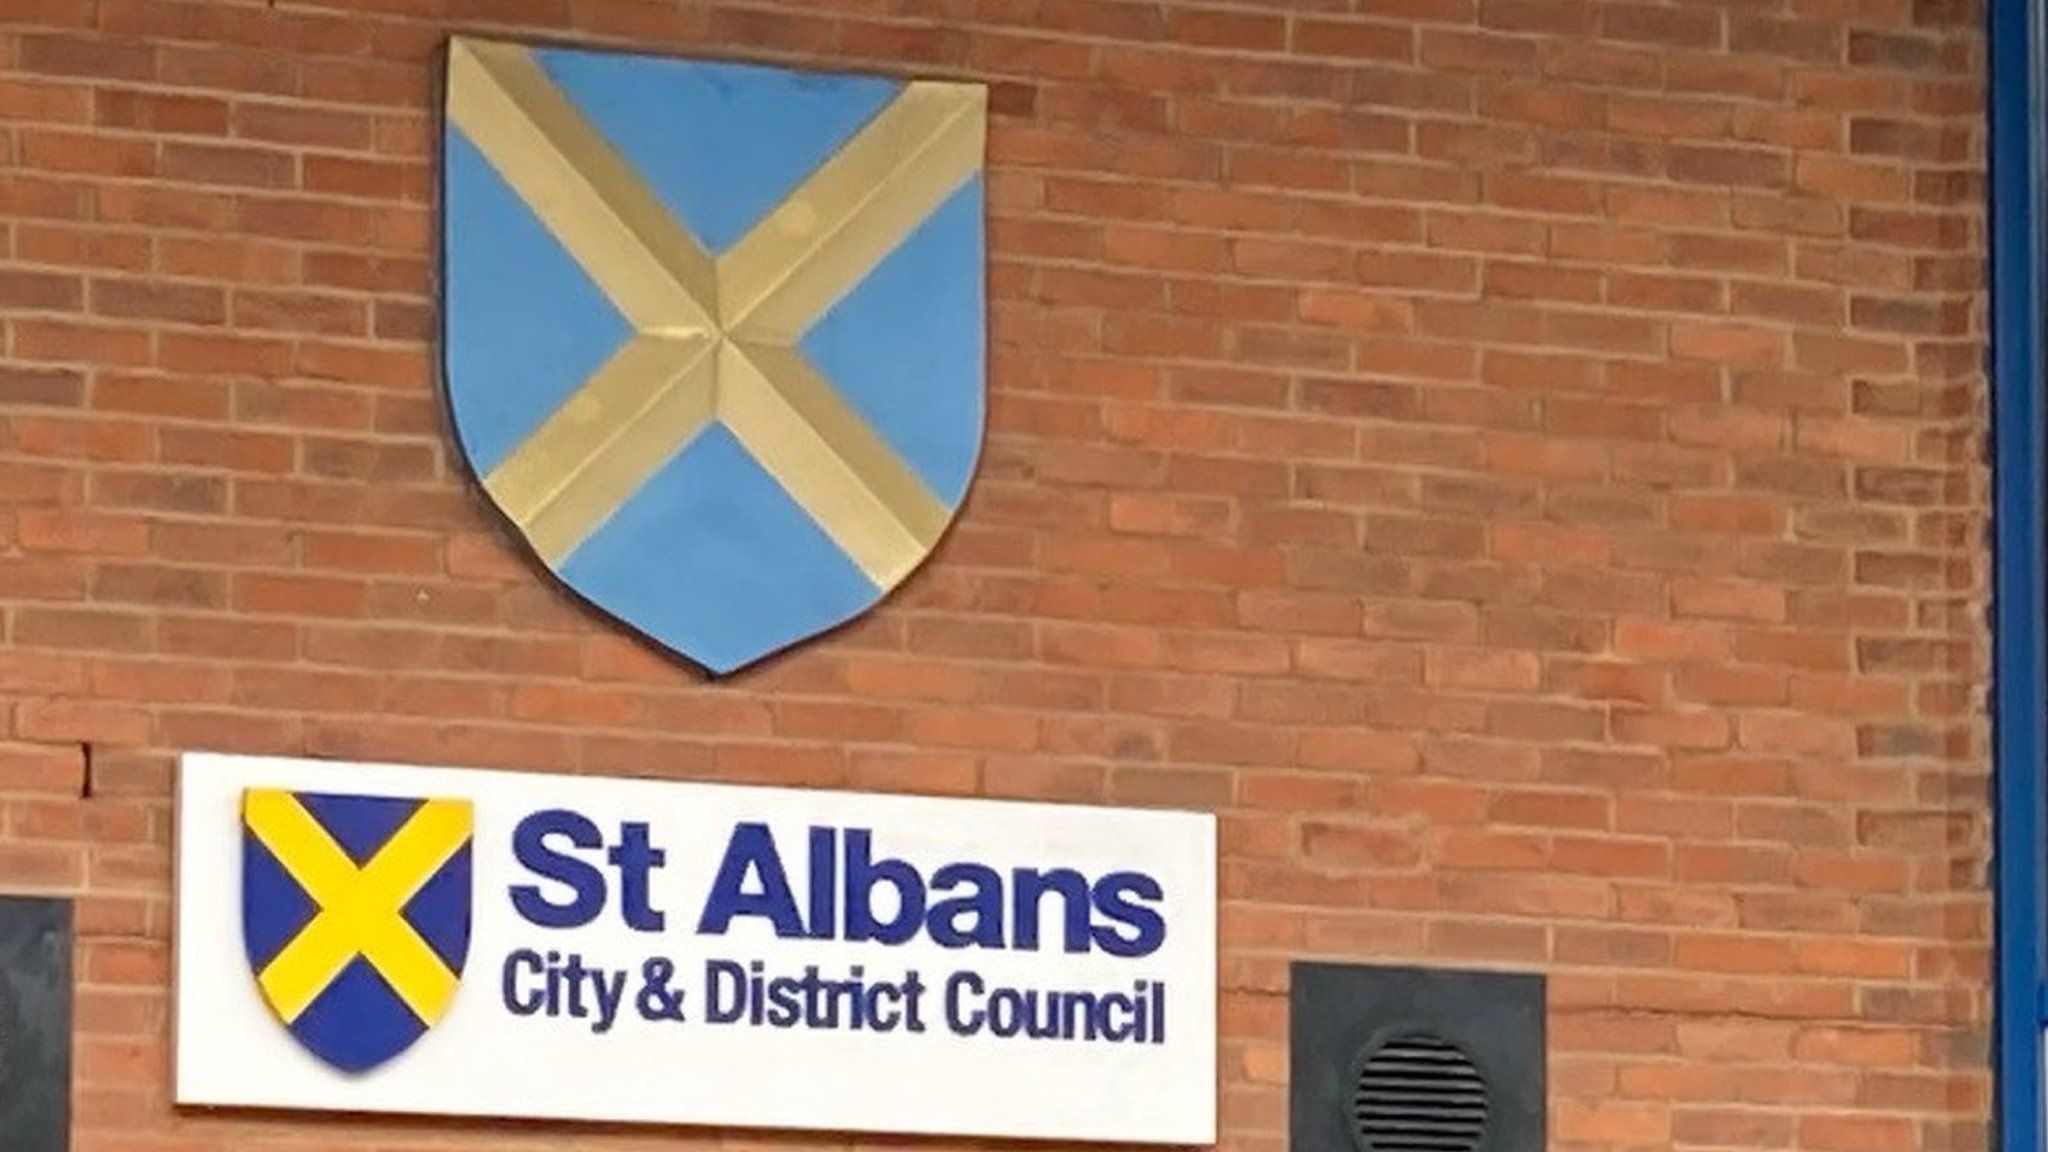 St Albans council offices